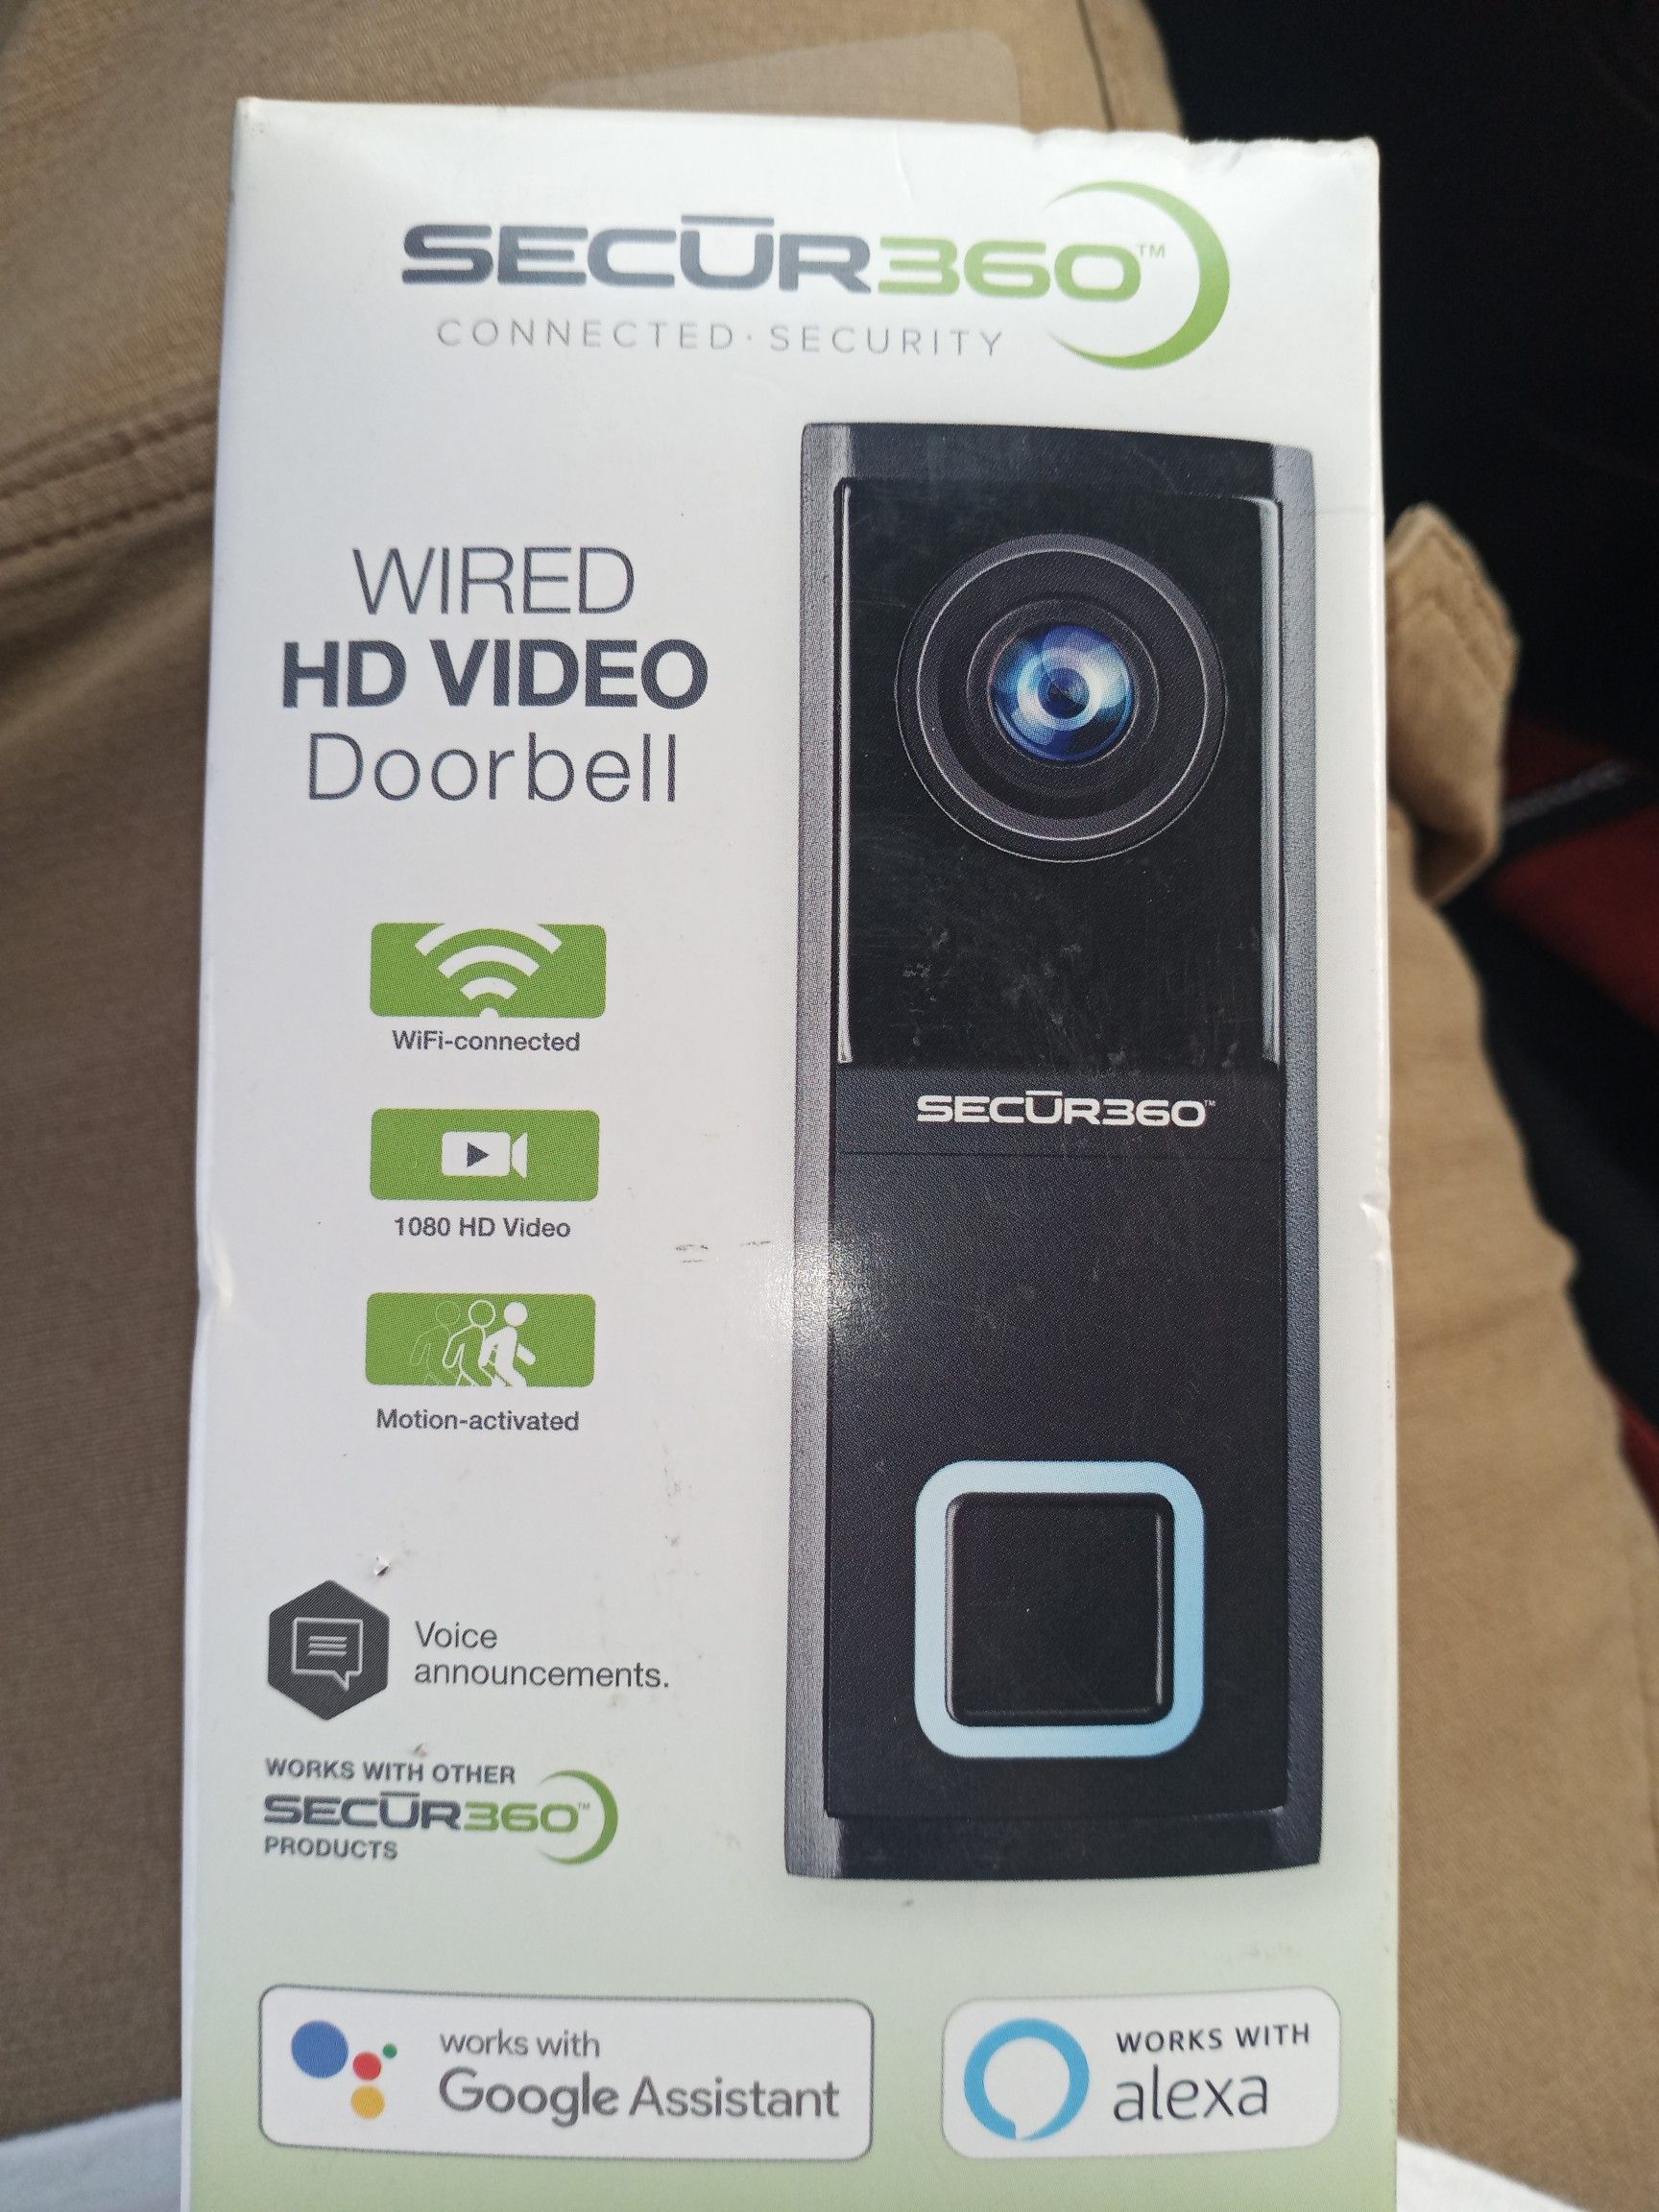 Secur360 1080 HD doorbell camera